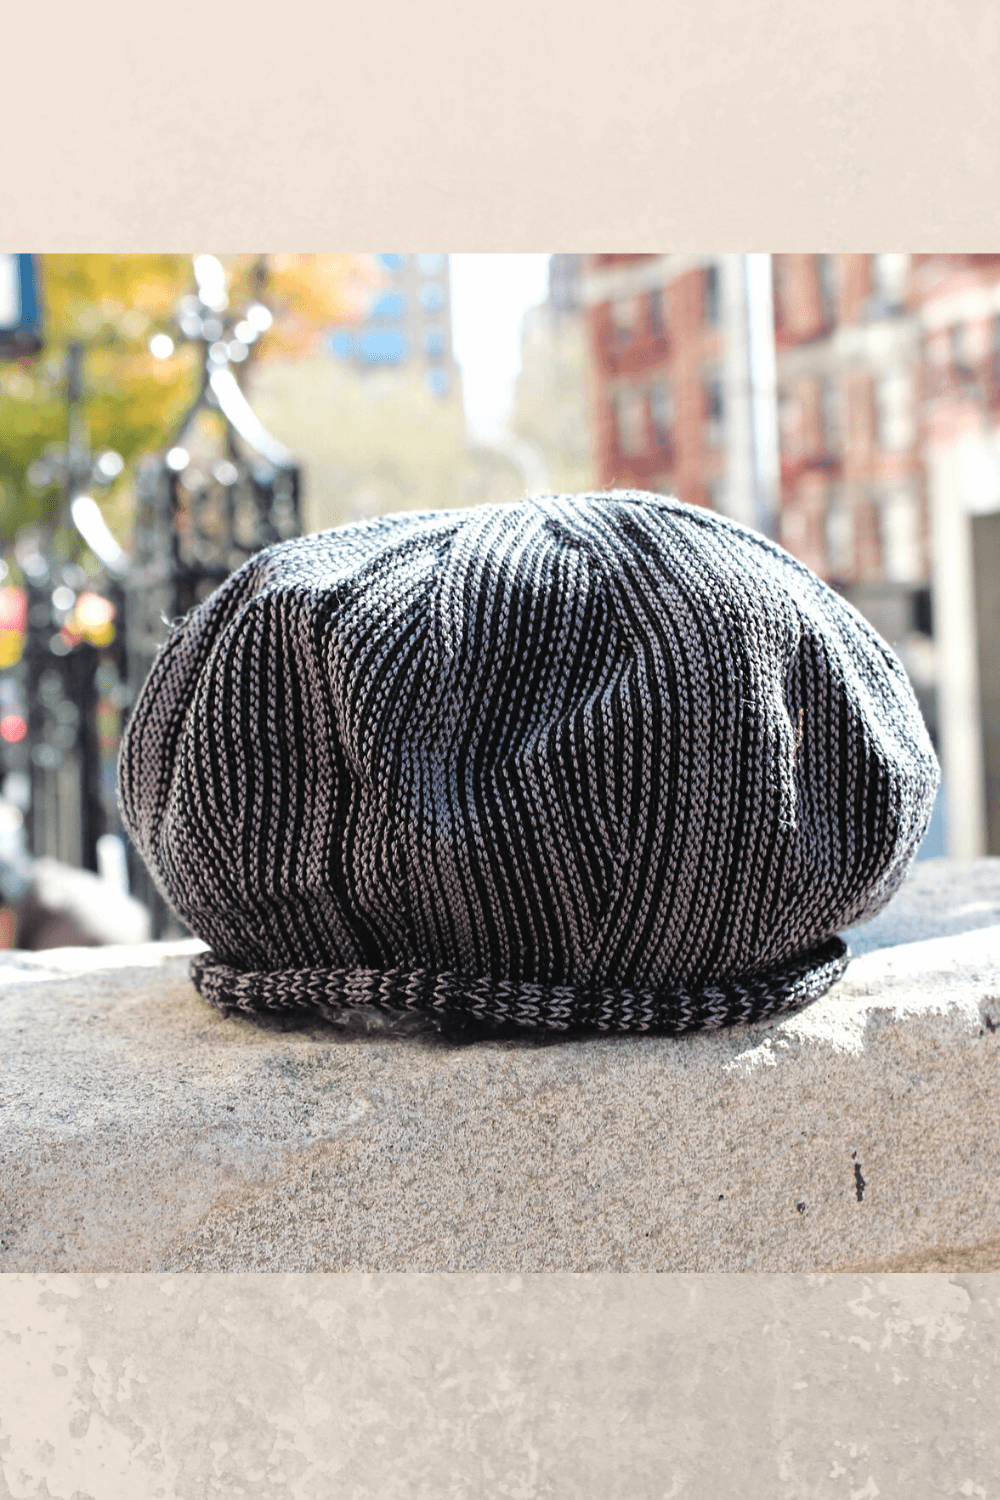 Hand knit Cotton tam in brown black stripe colorway.